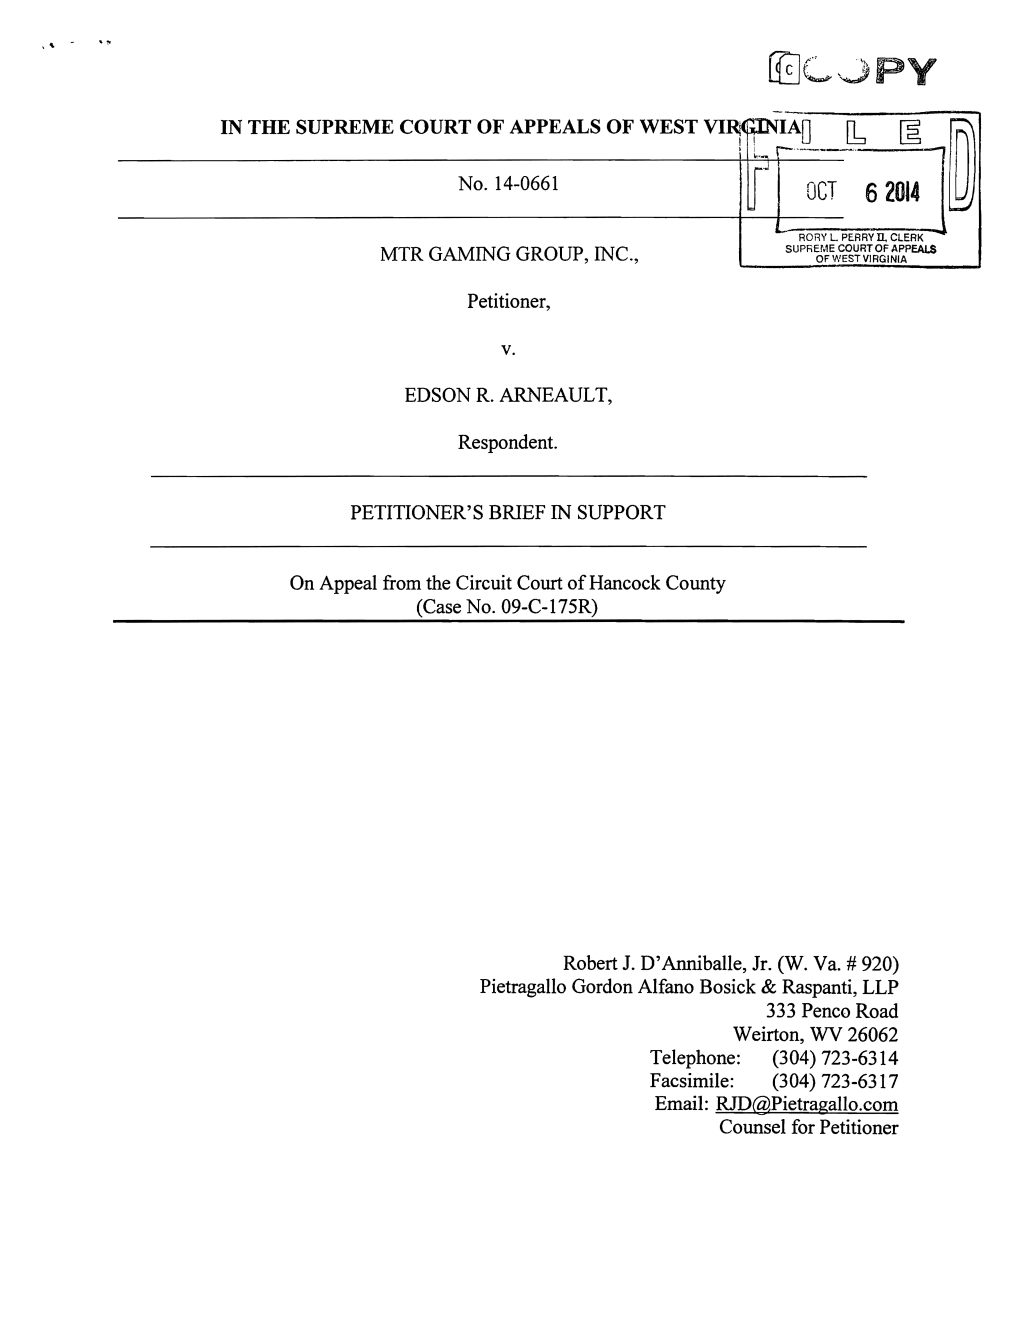 Petitioner's Brief, MTR Gaming Group, Inc. V. Edson R. Arneault, No. 14